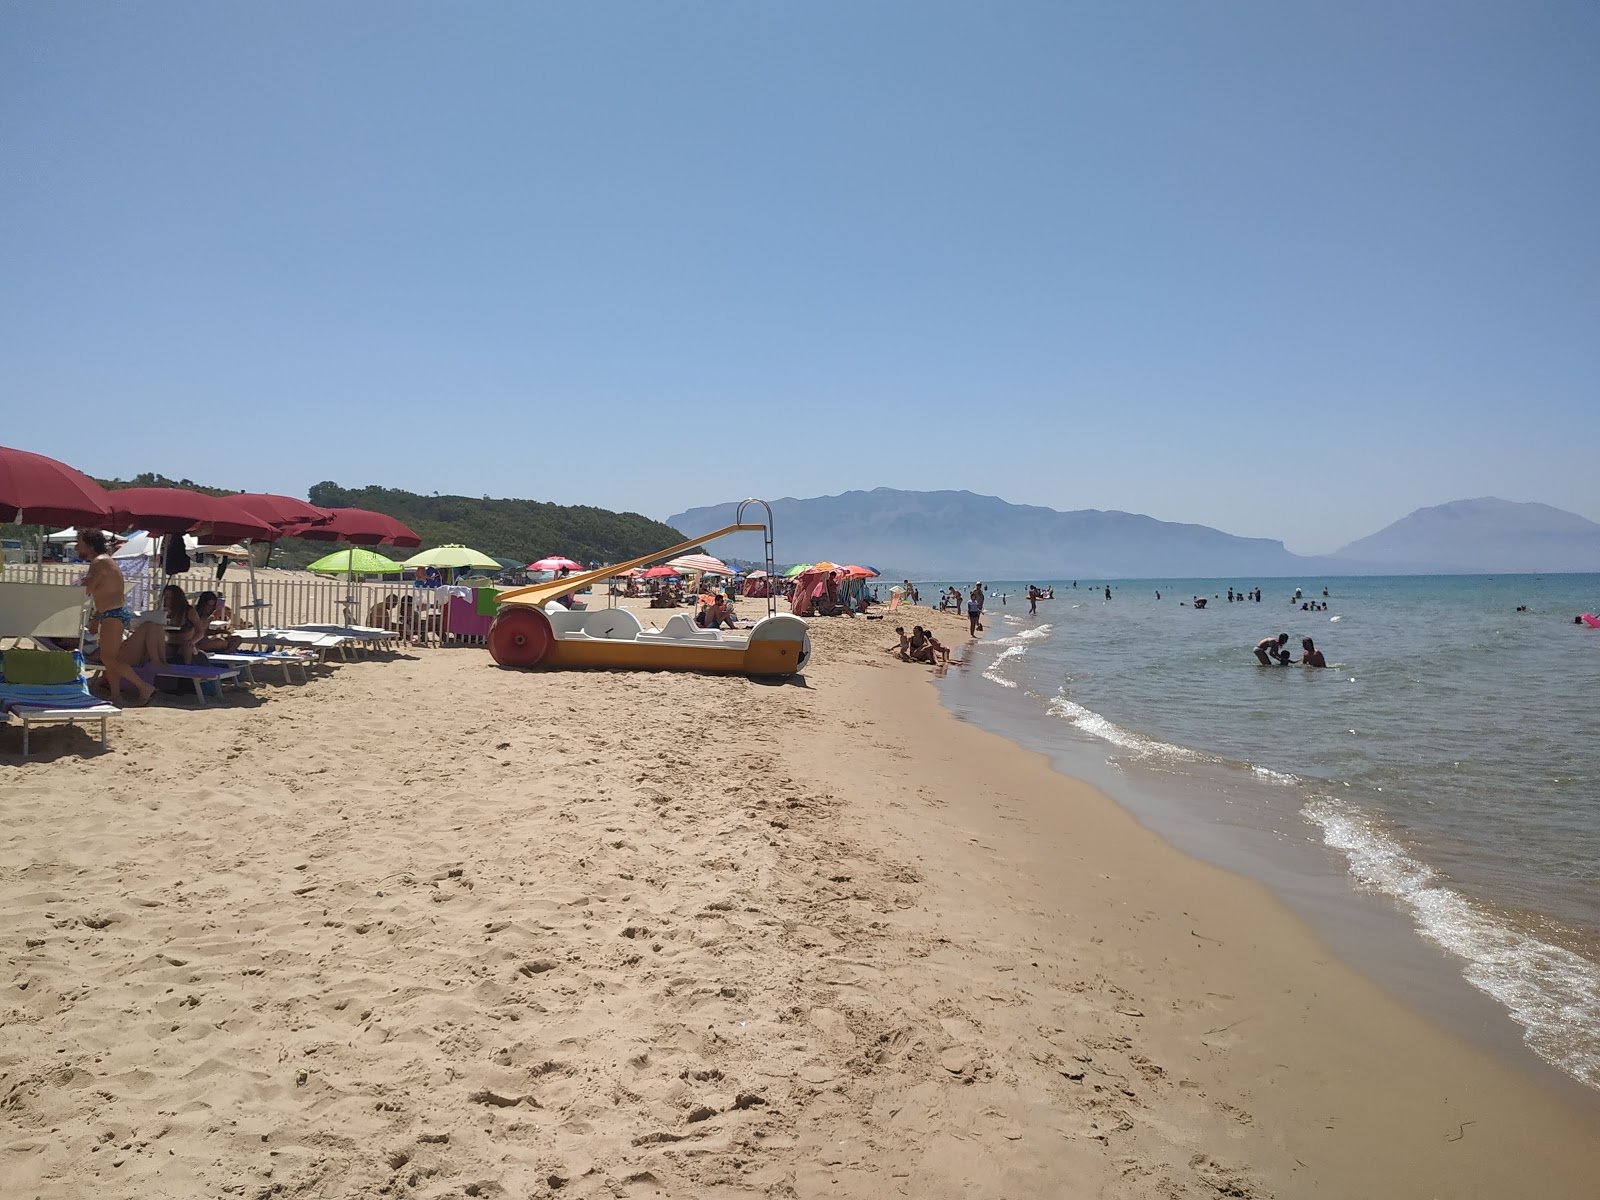 Foto de Spiaggia Di Balestrate - lugar popular entre os apreciadores de relaxamento